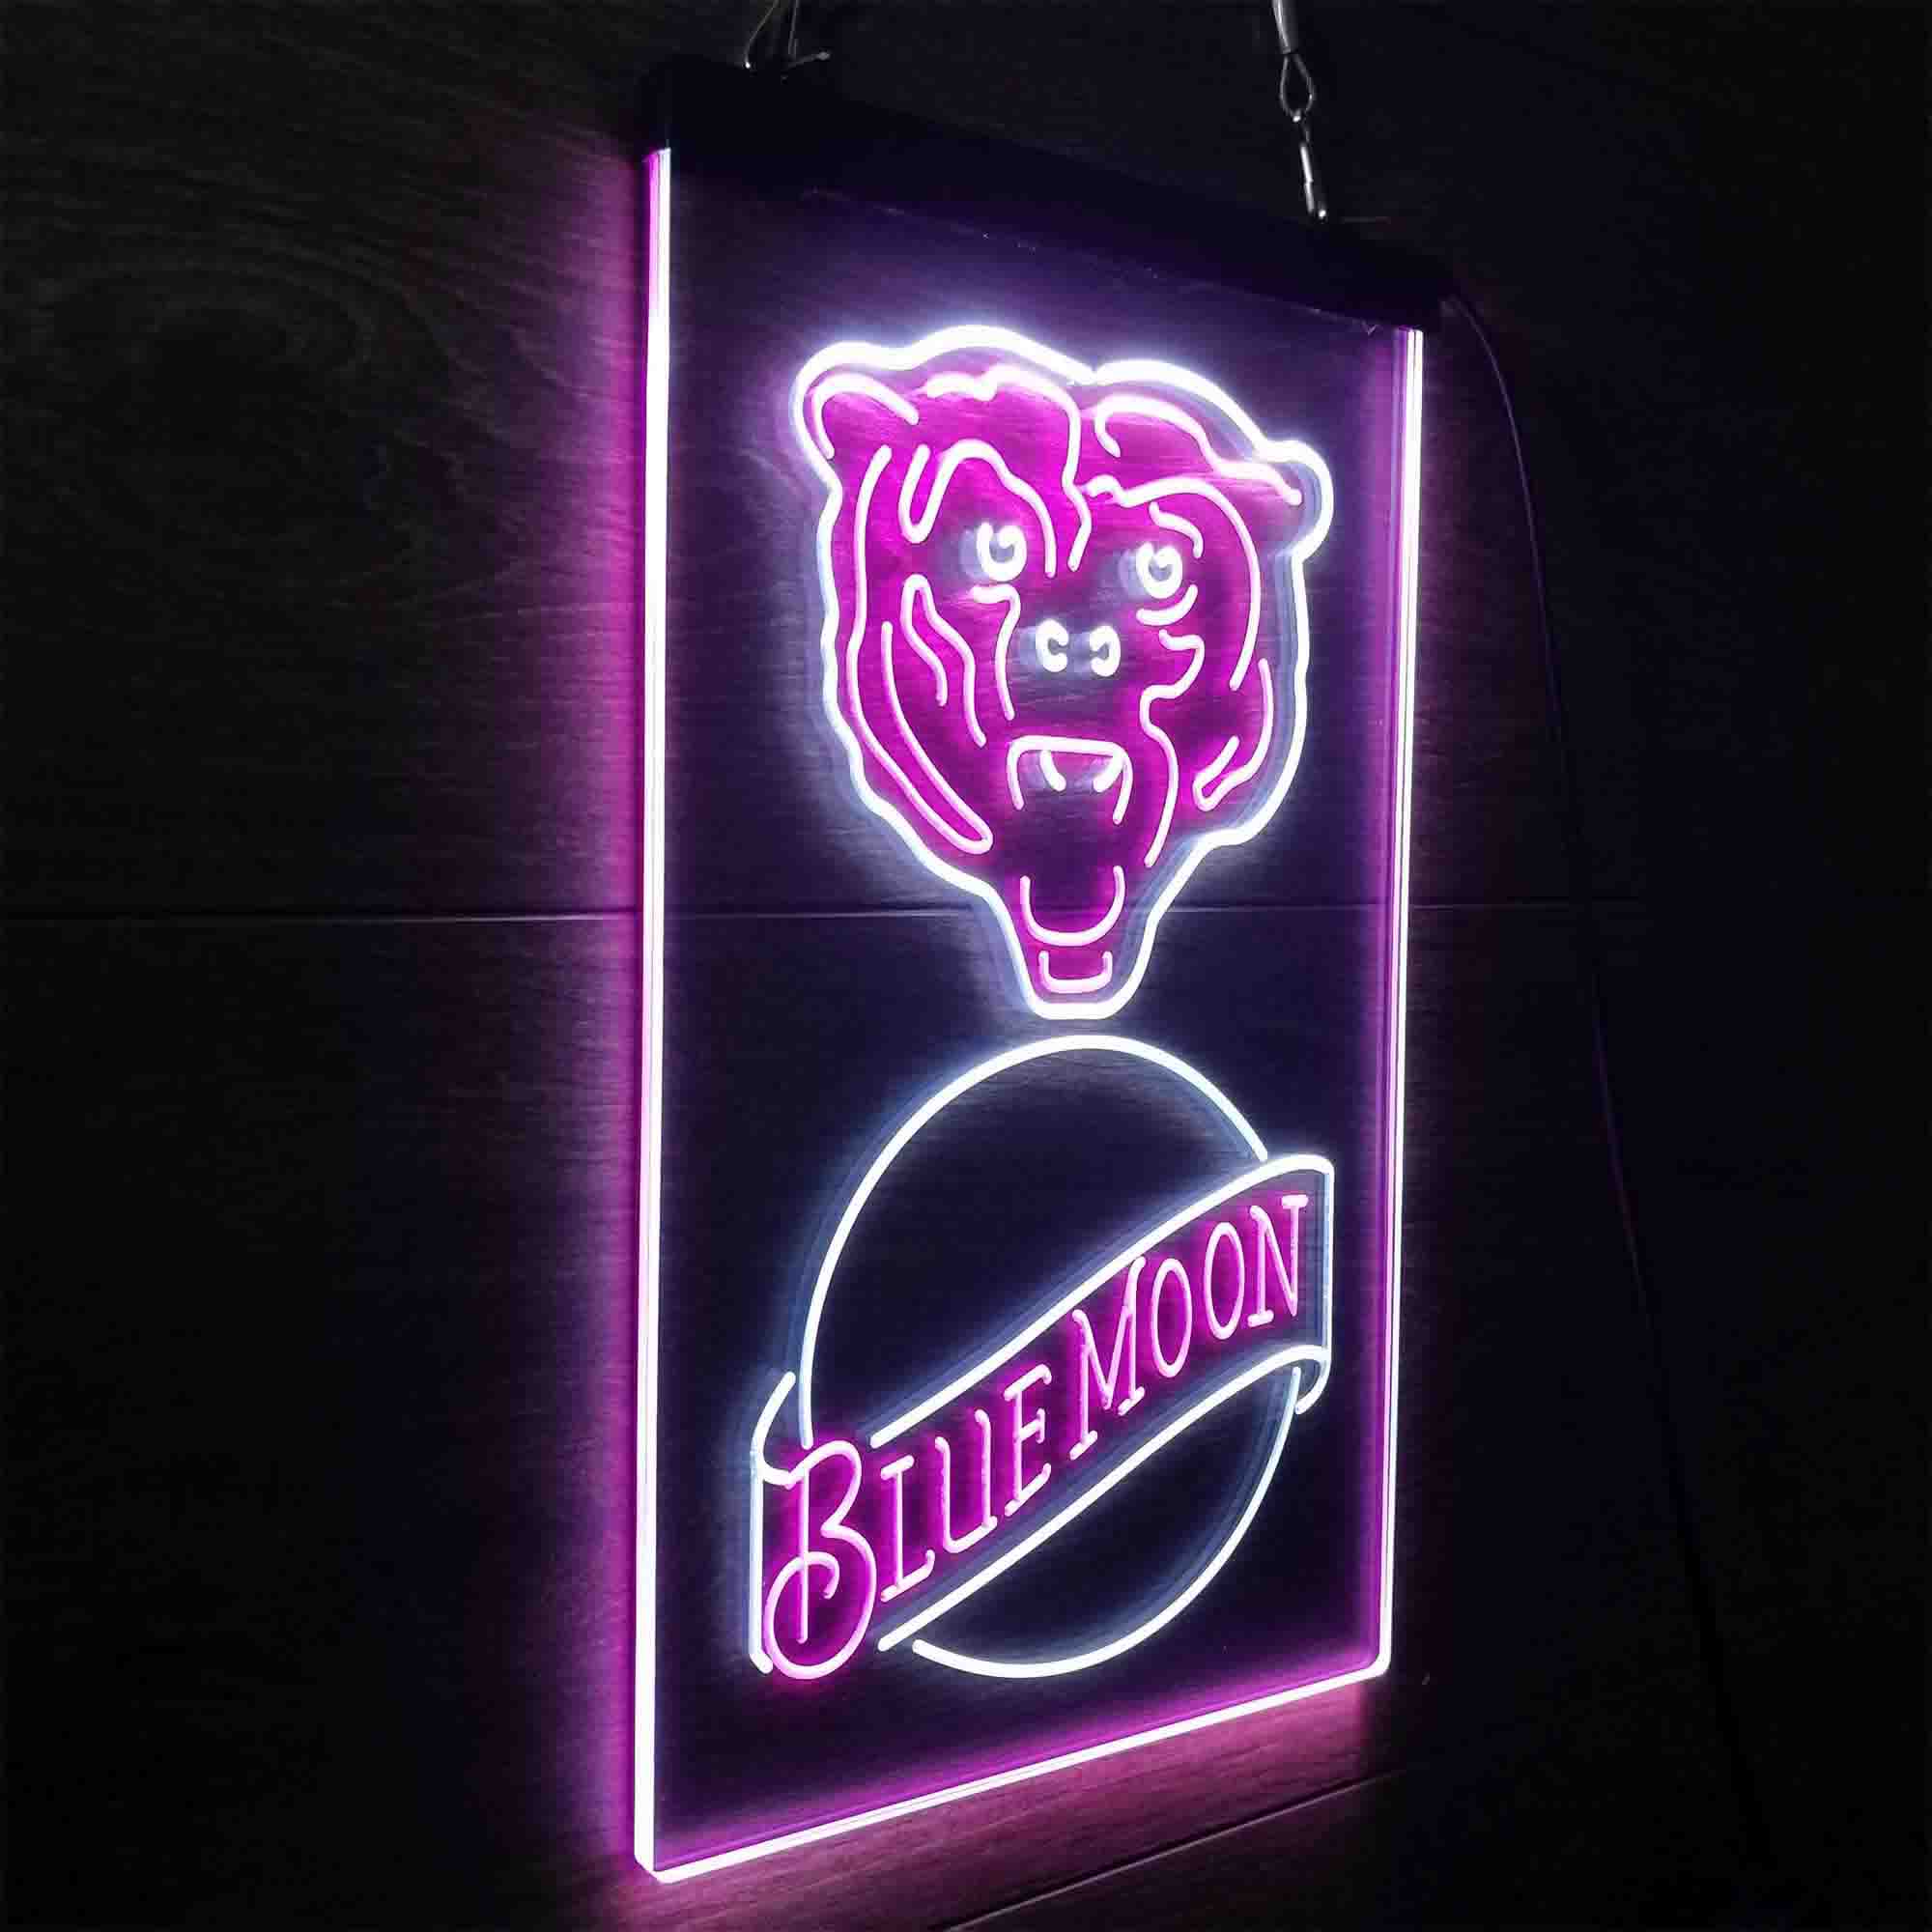 Blue Moon Bar Chicago Bears Est. 1920 LED Neon Sign